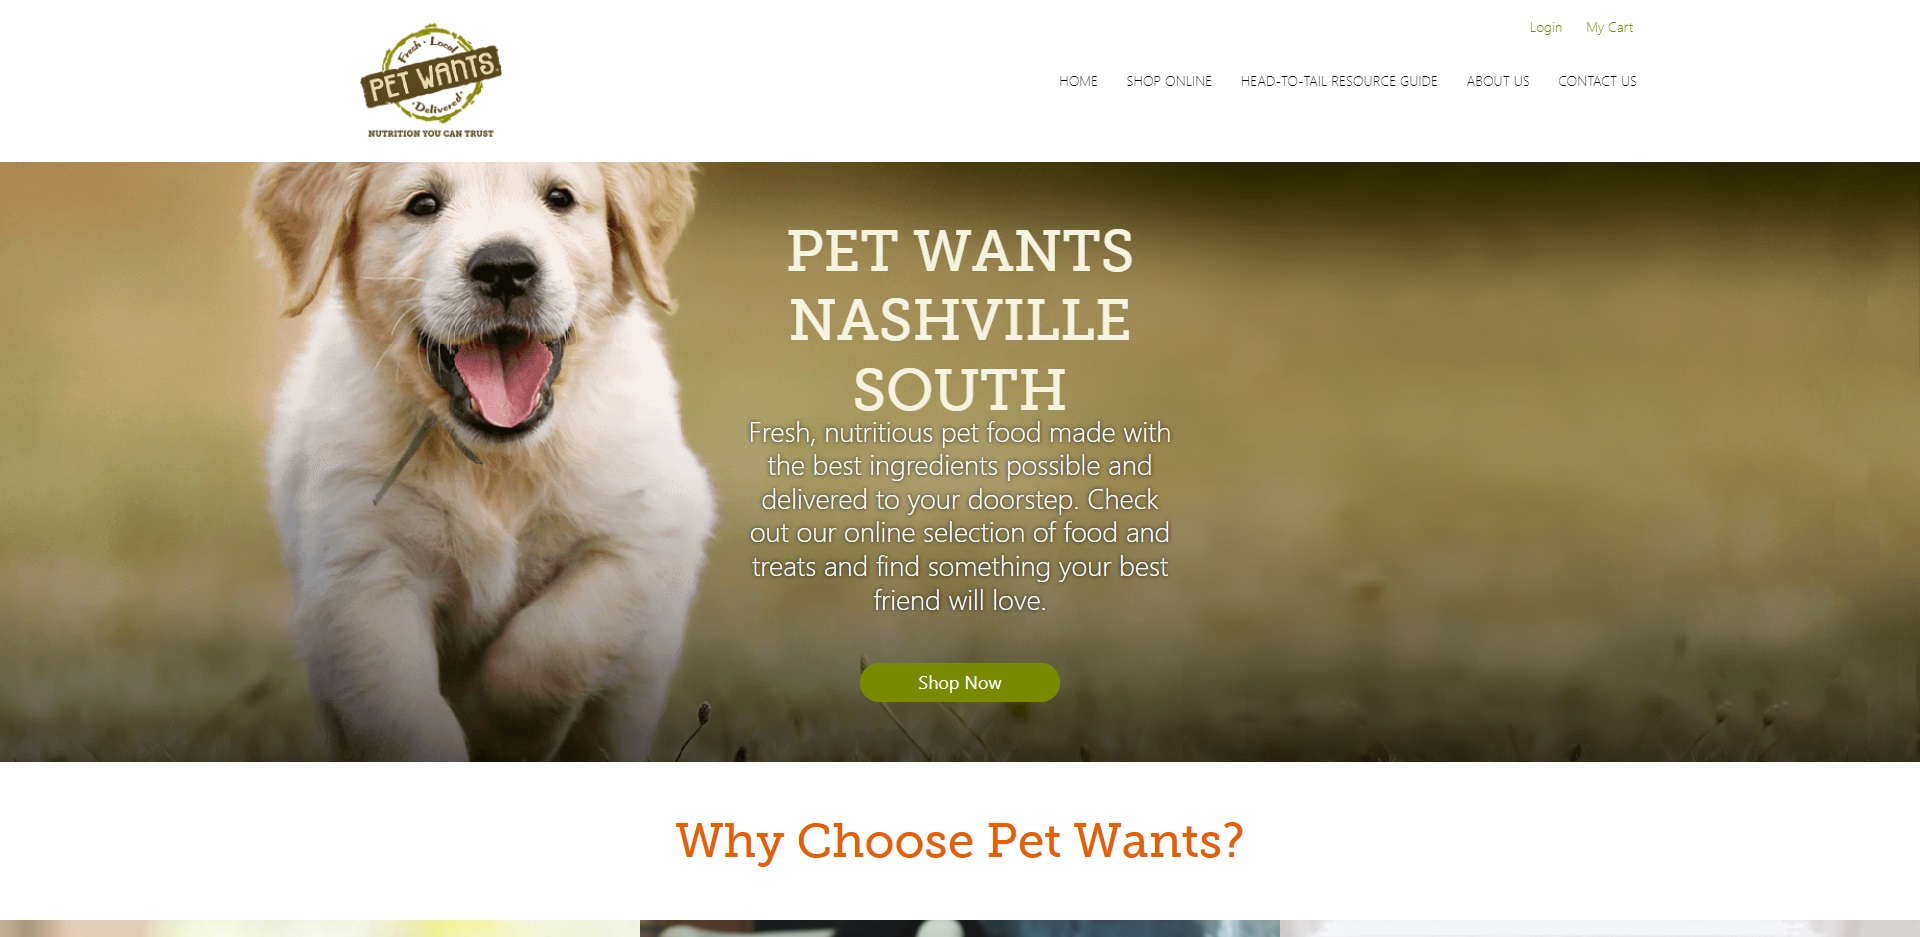 Nashville, Tennessee's Best Pet Shop